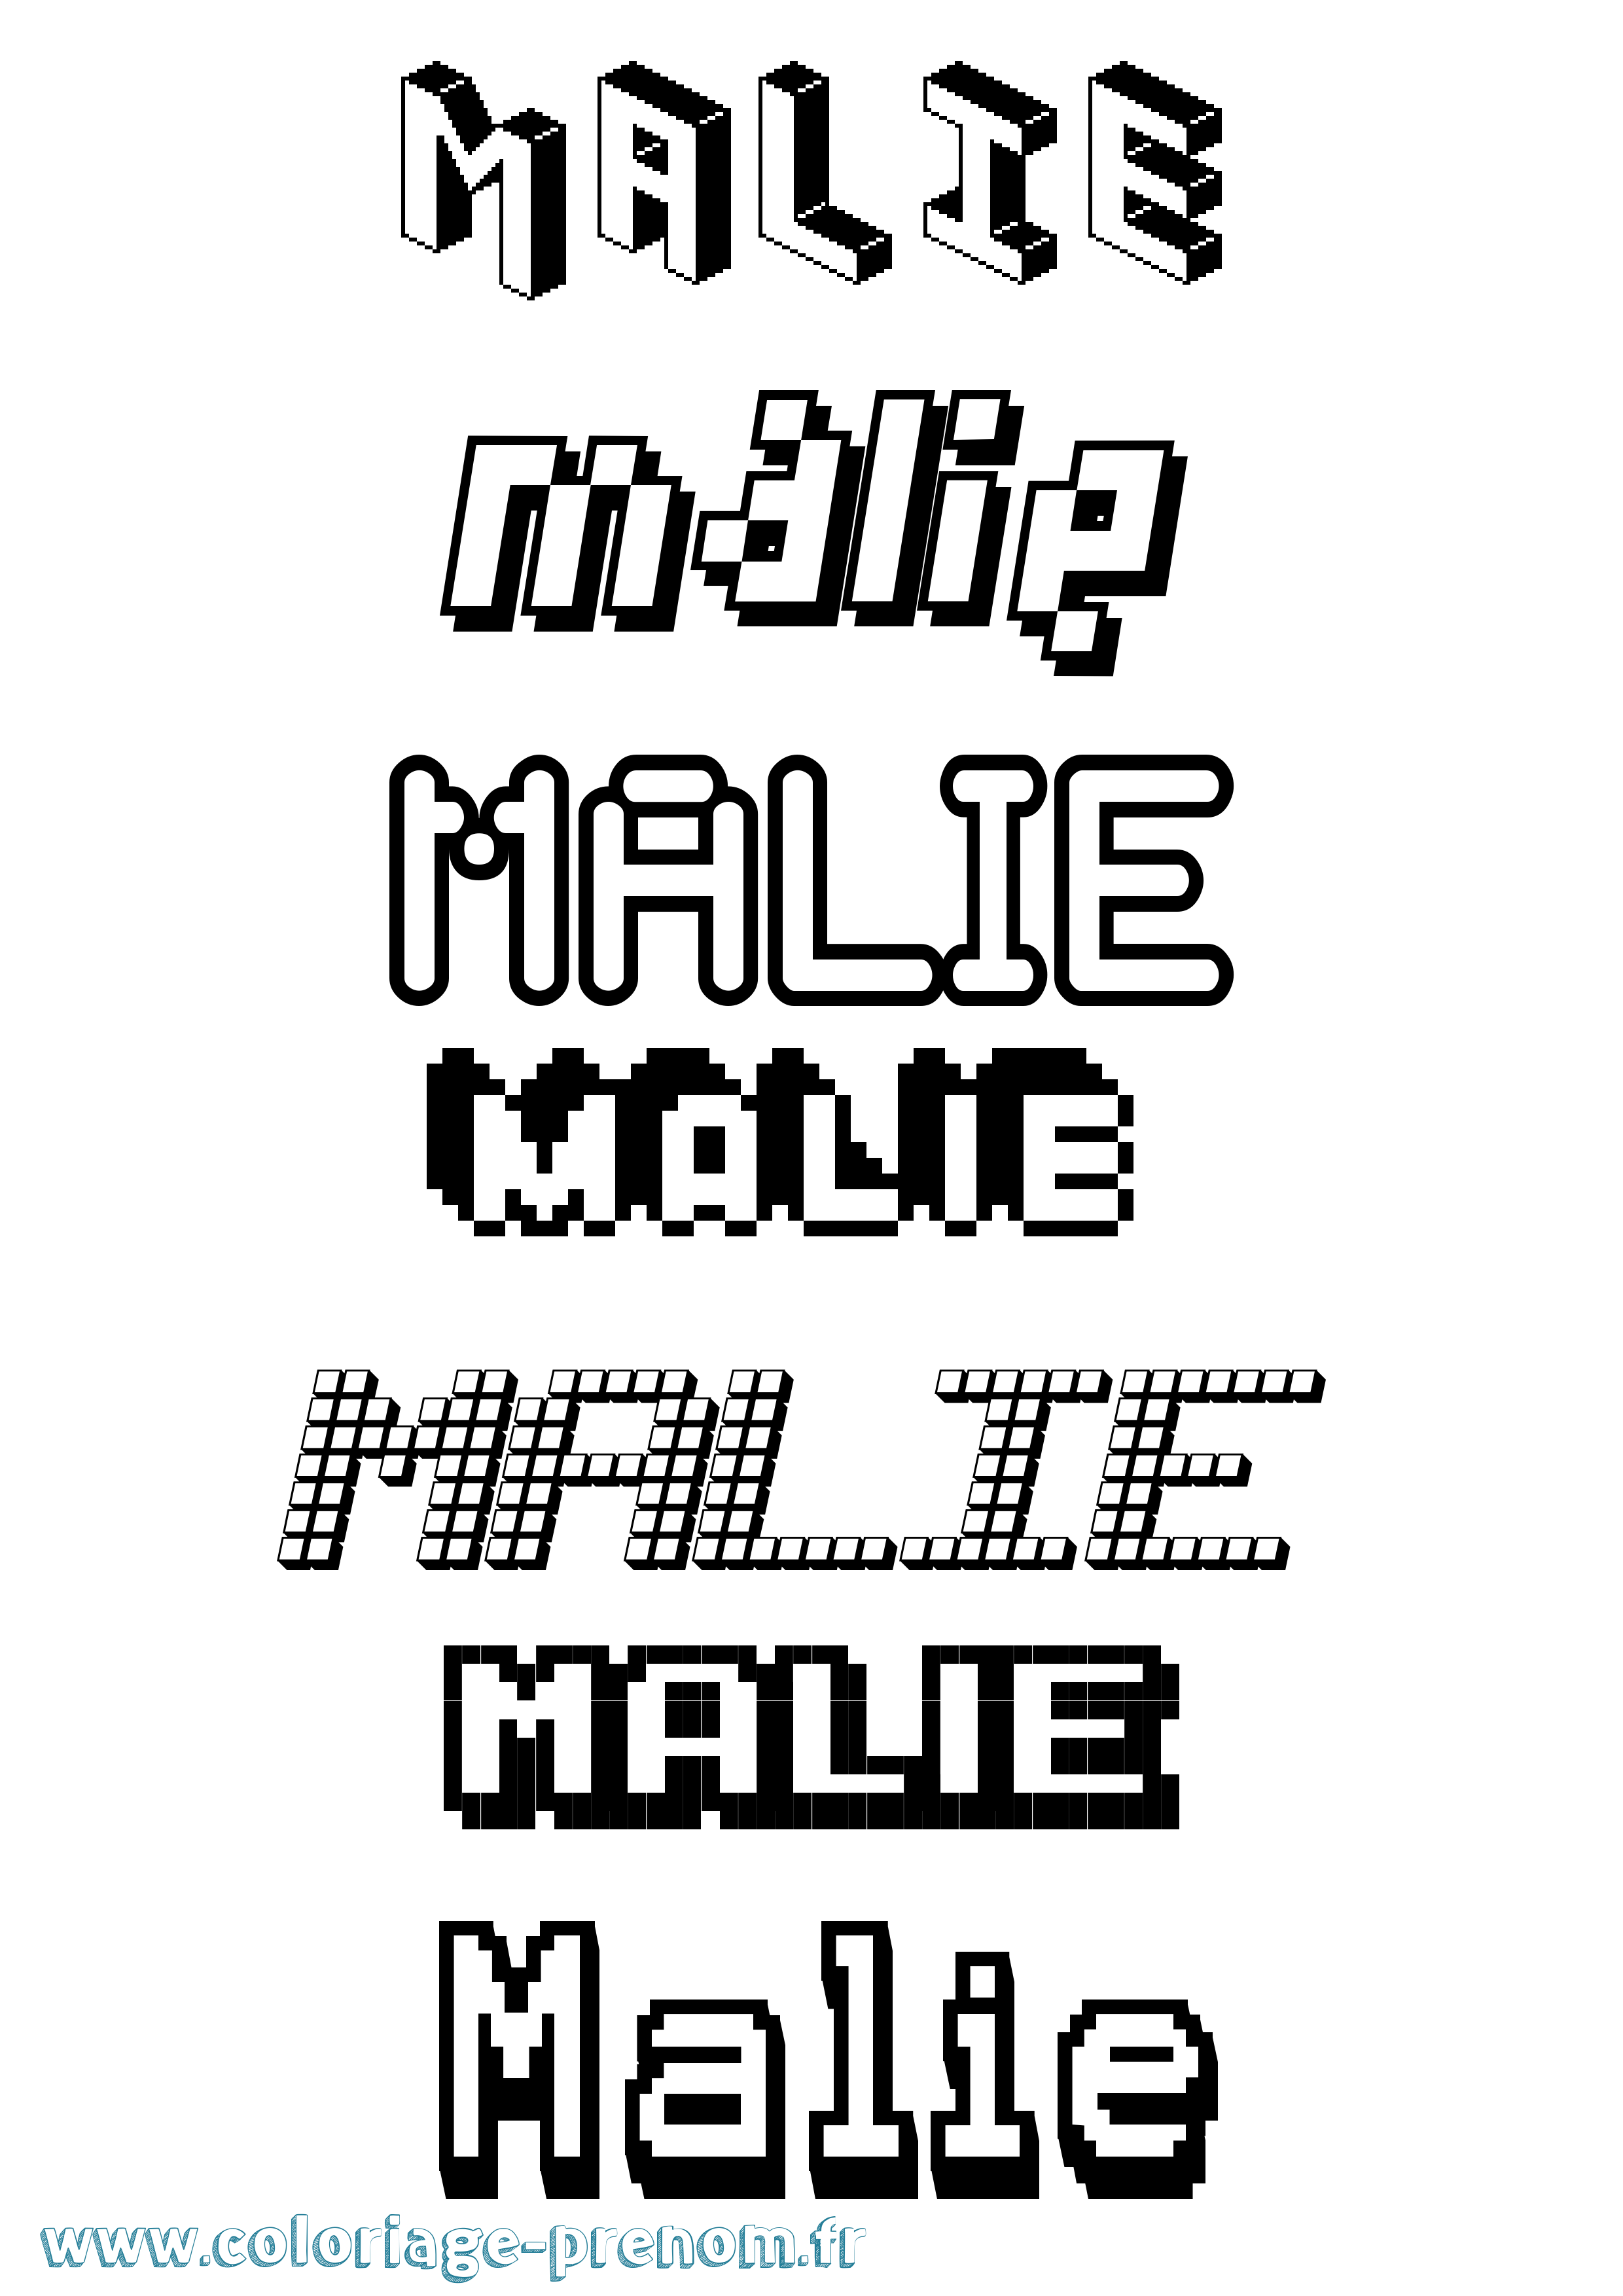 Coloriage prénom Malie Pixel